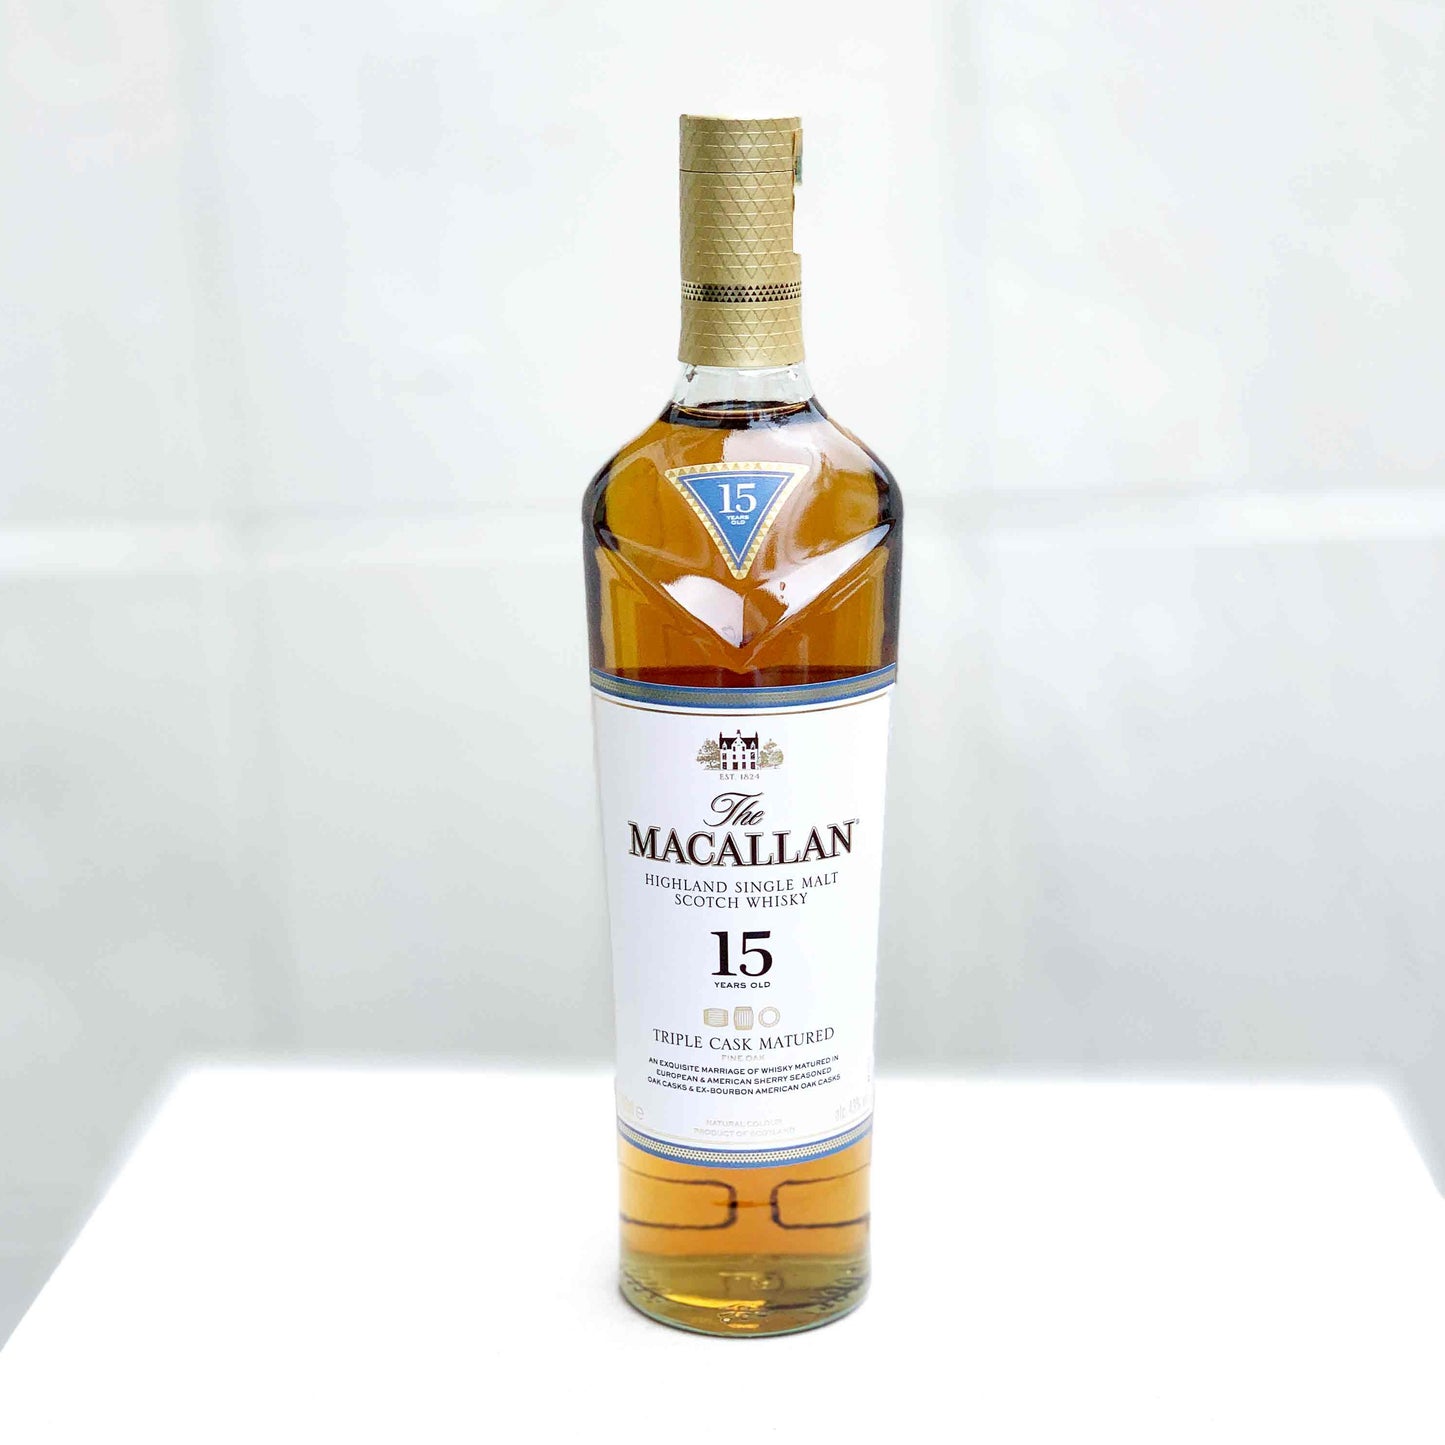 The Macallan 15 Year Old Triple Cask Matured Single Malt Scotch Whisky